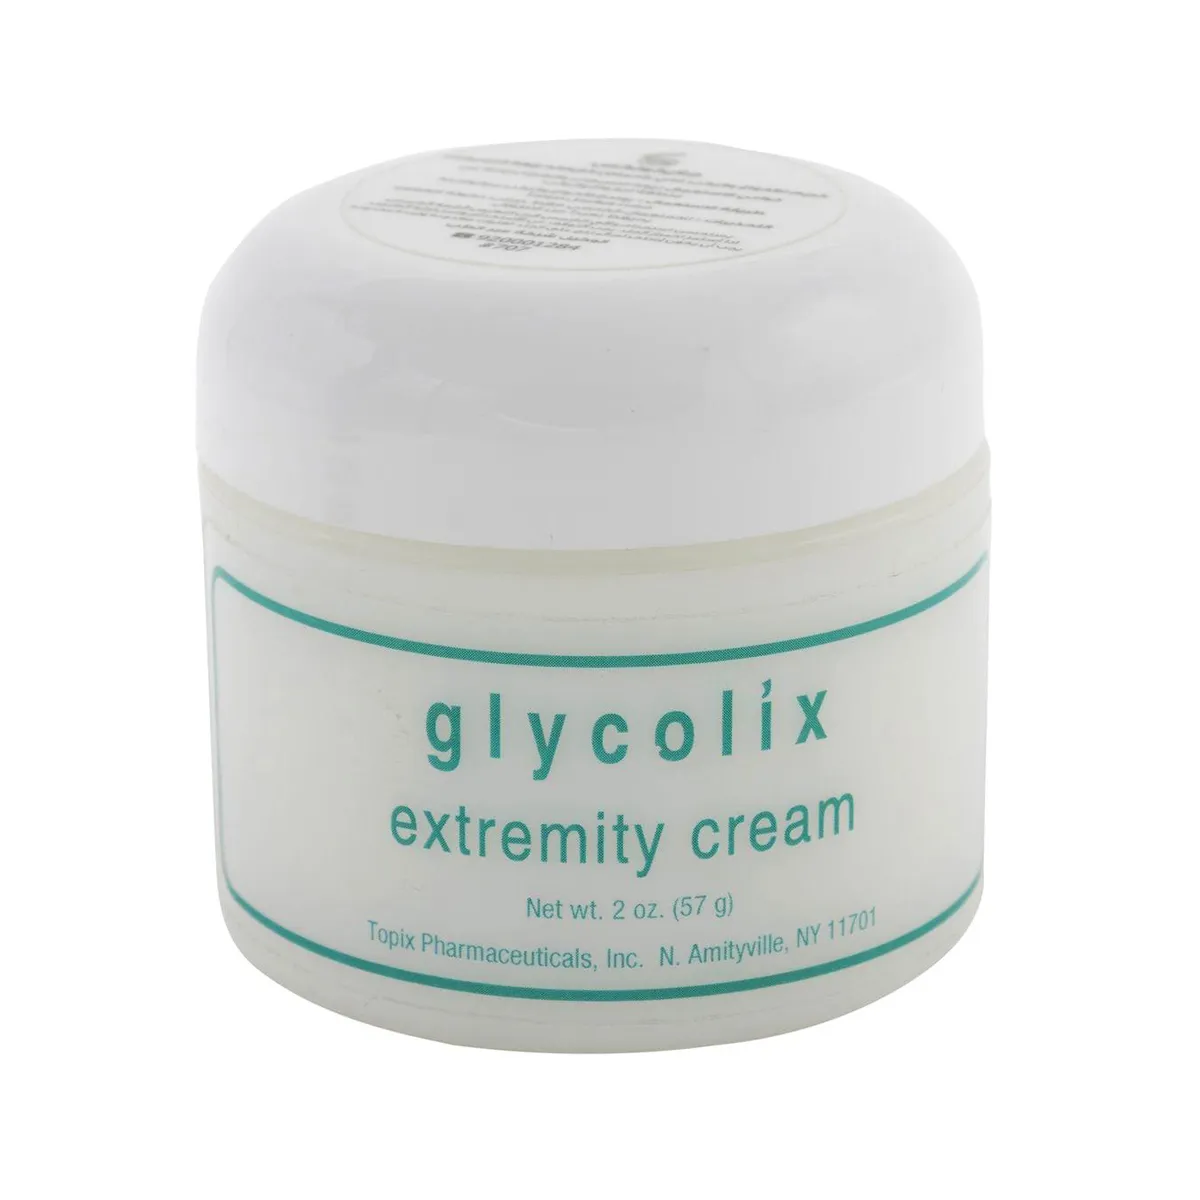 Extremity Cream Glycolic 18% 60Ml